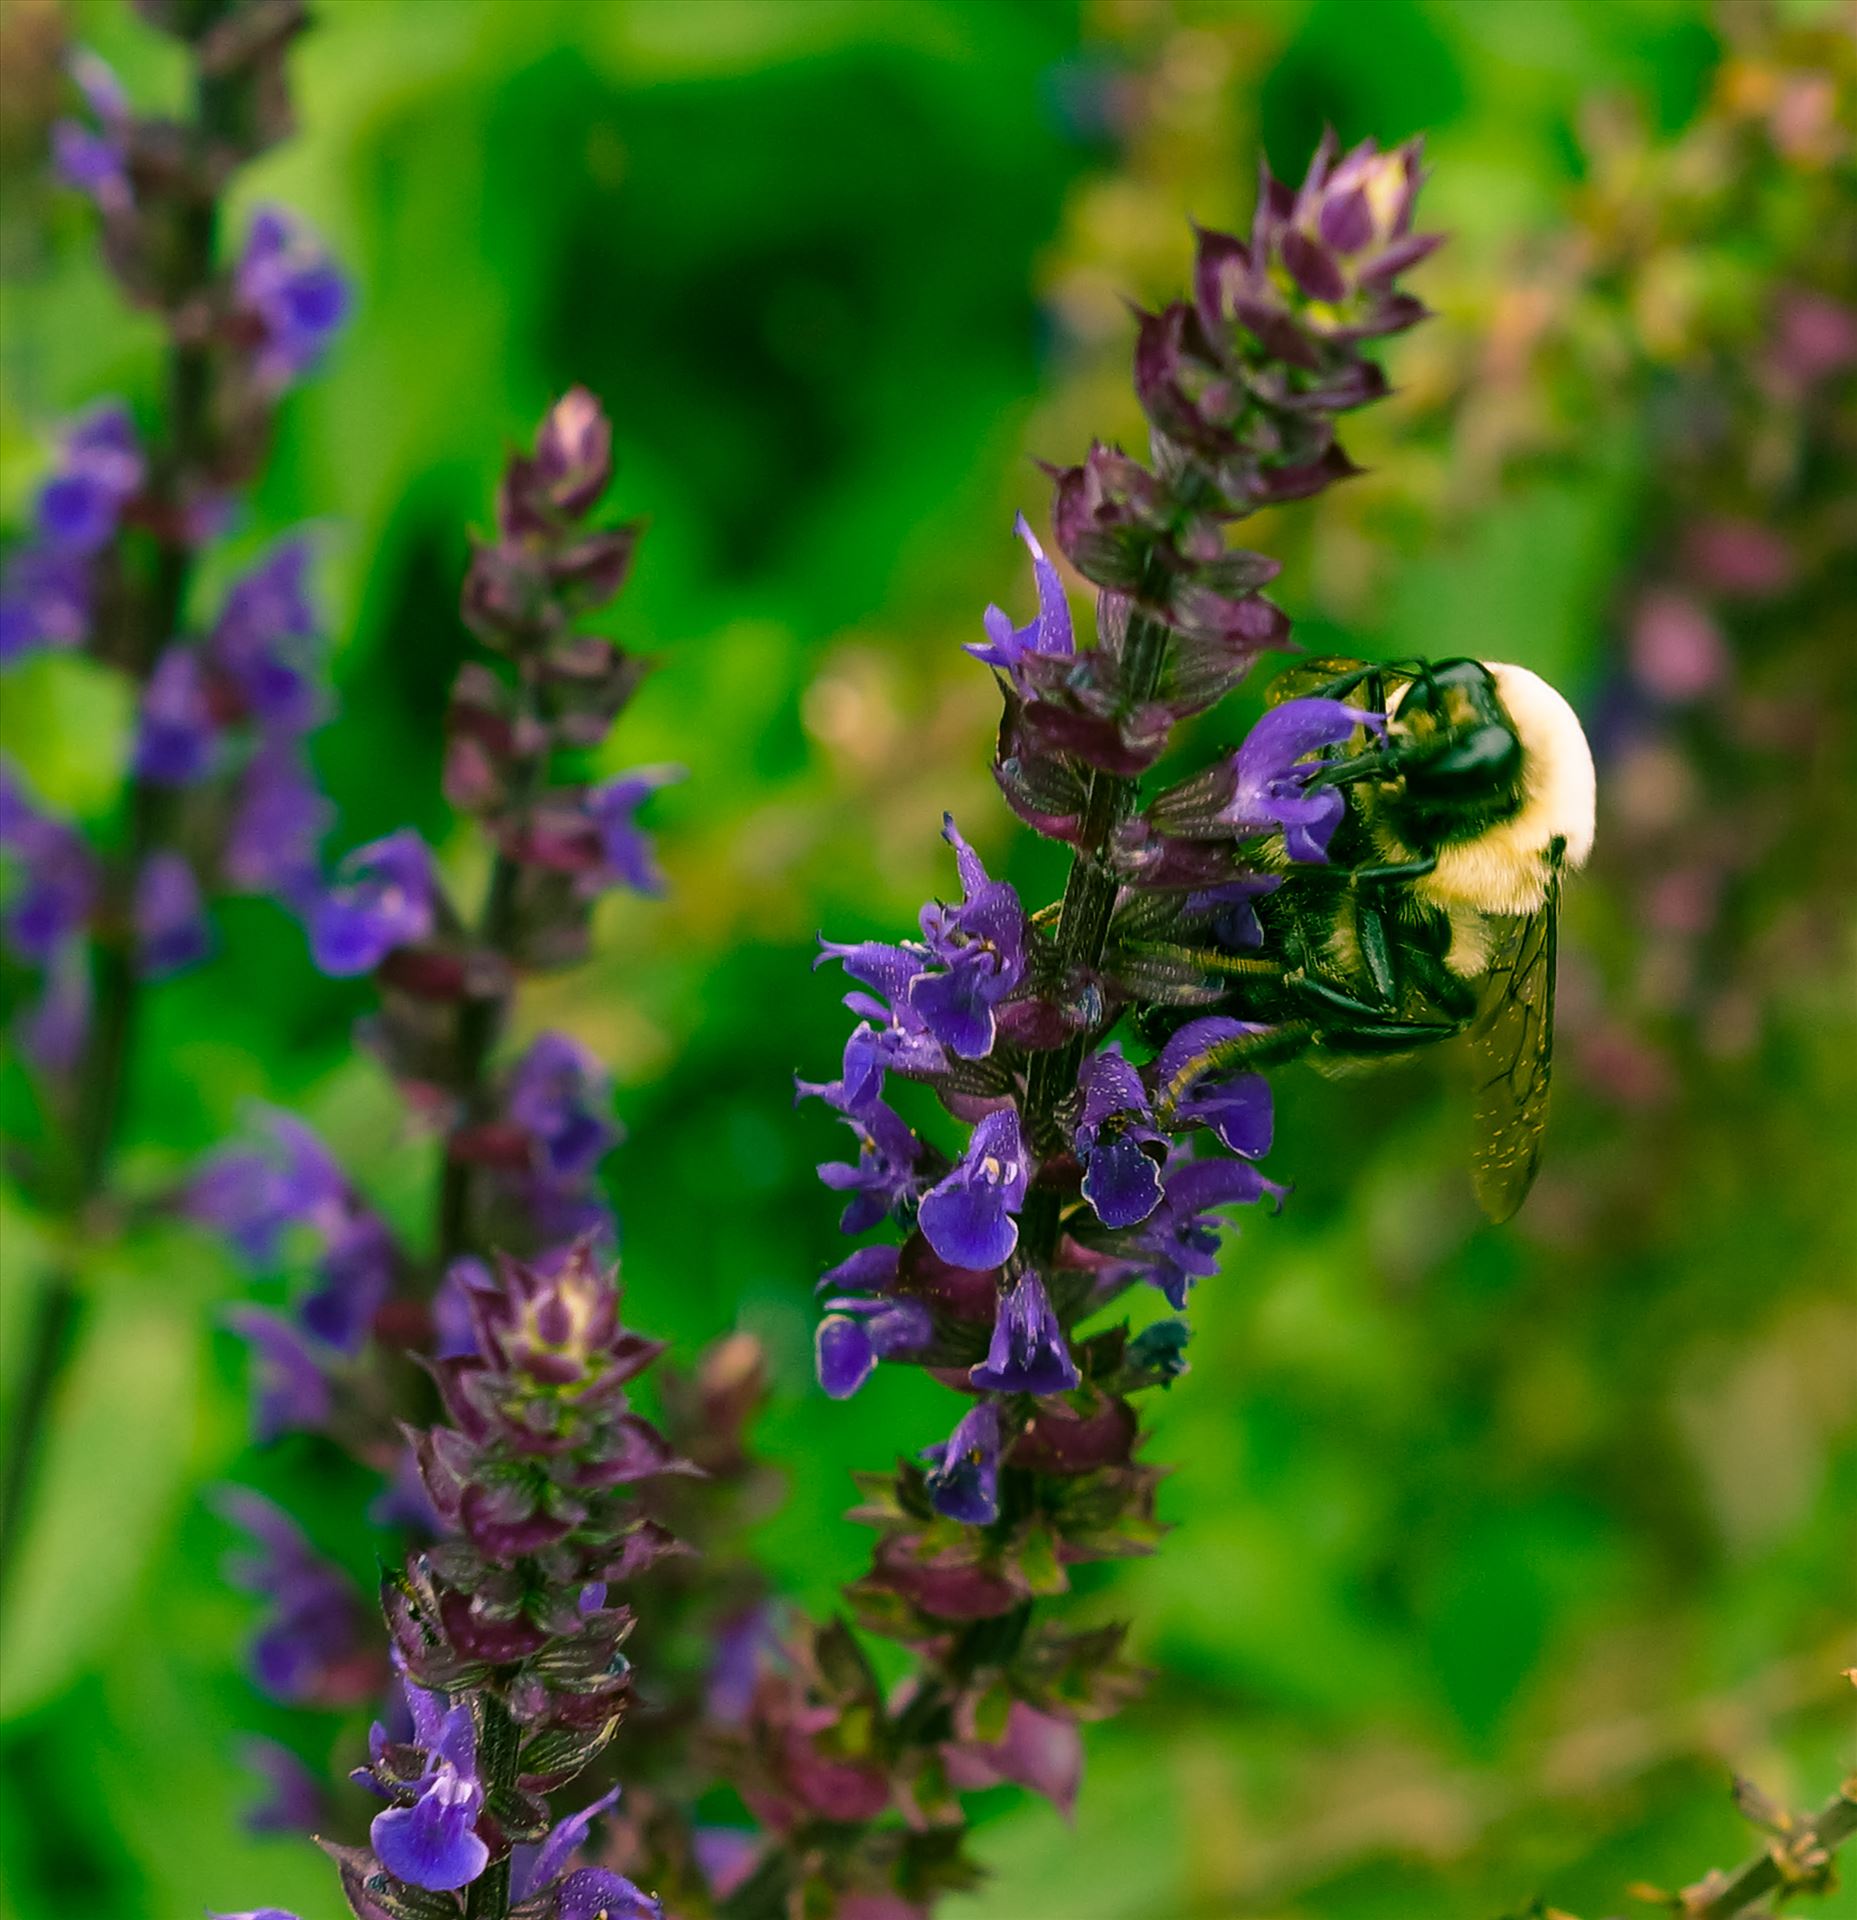 Bumblebee on Purple Flower Stem.jpg -  by ArturoVazquez